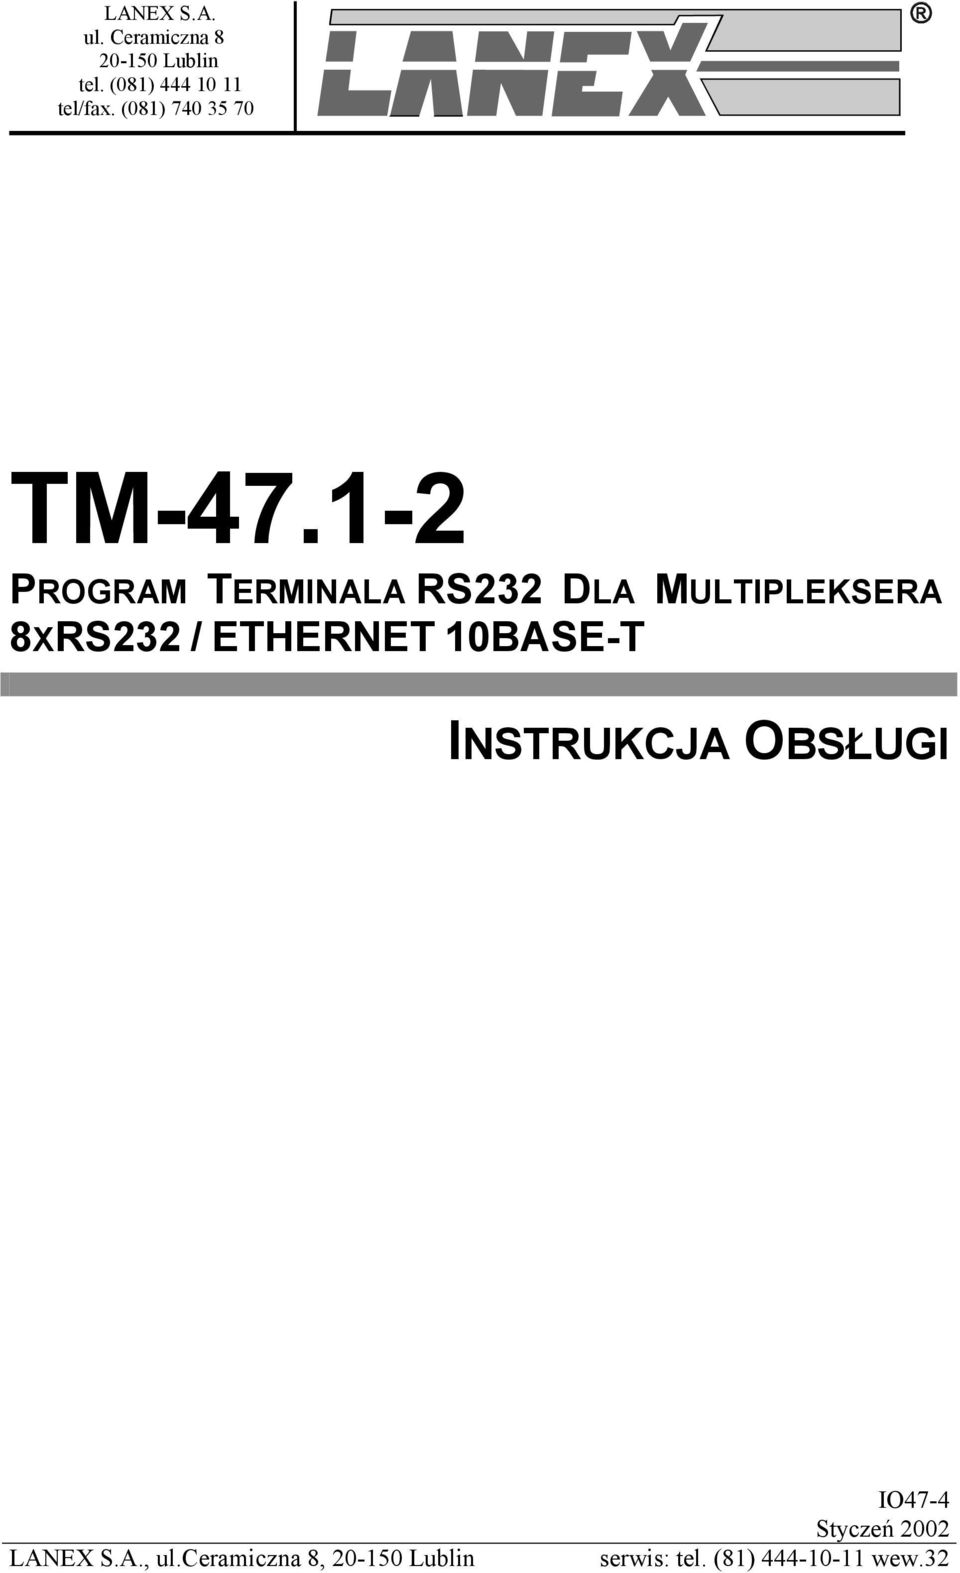 1-2 PROGRAM TERMINALA RS232 DLA MULTIPLEKSERA 8XRS232 / ETHERNET